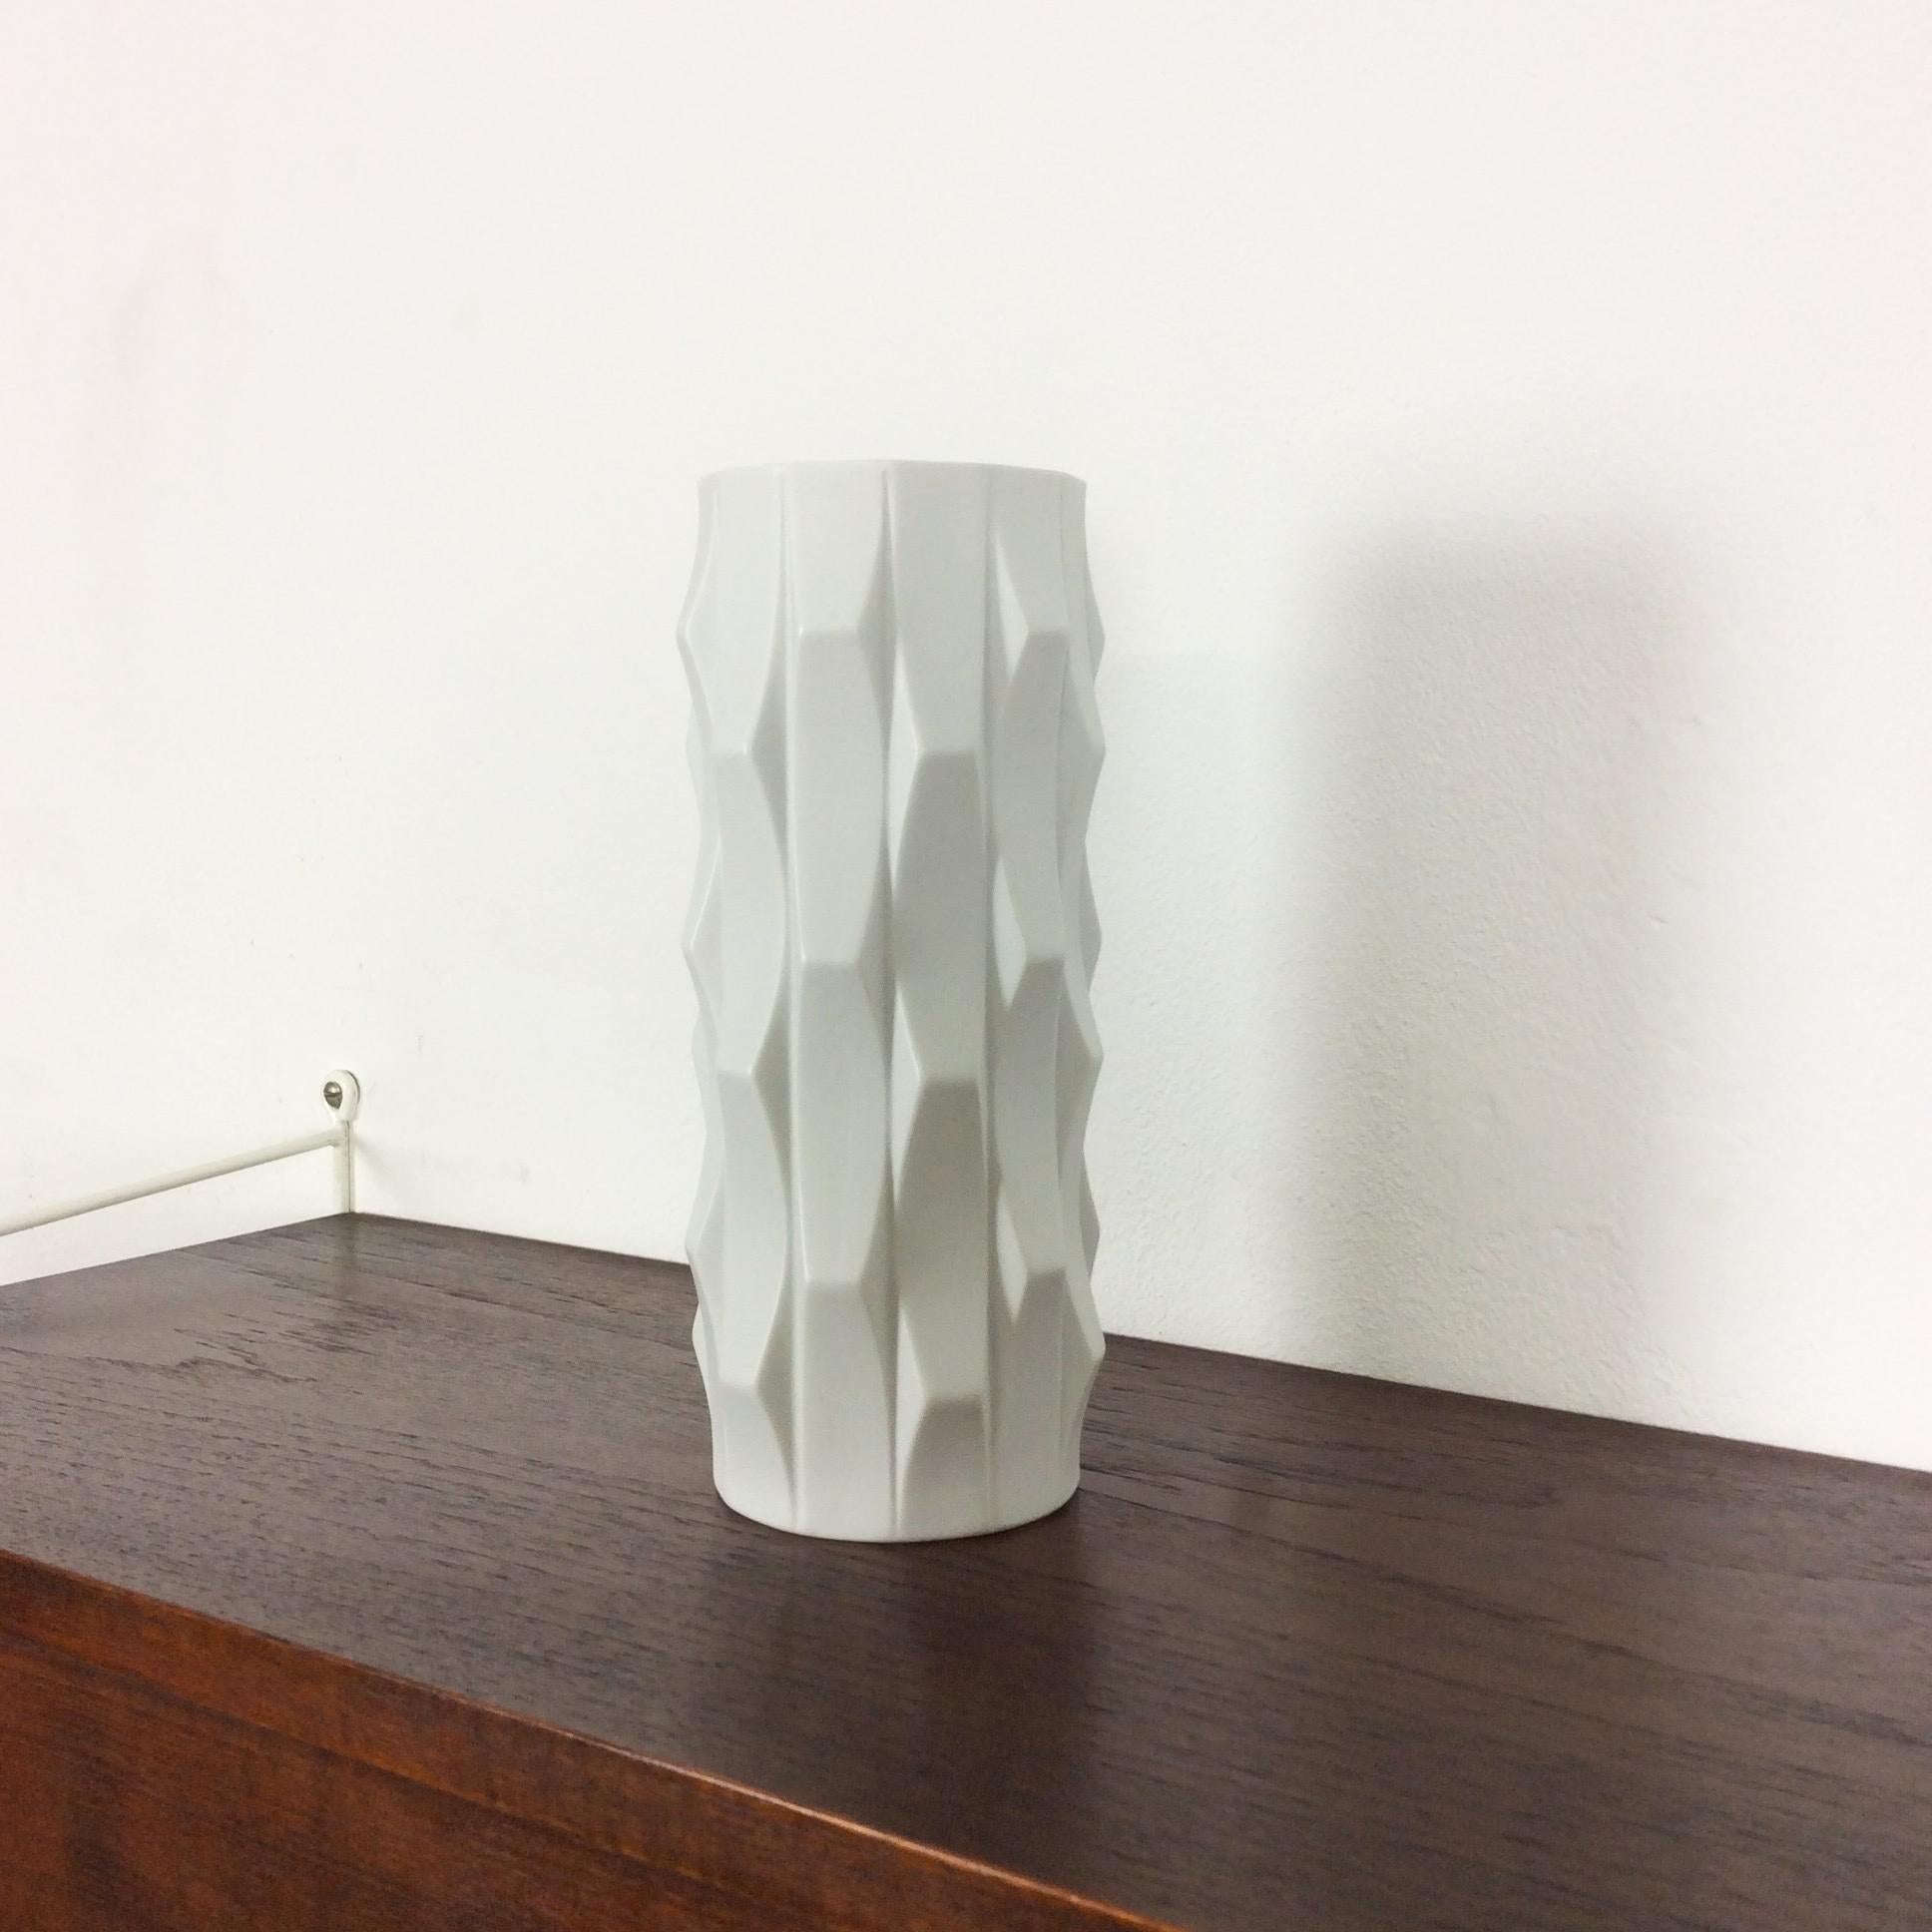 Article:

OP Art porcelain vase


Producer:

Hutschenreuther, Germany


Designer:

Heinrich Fuchs



Decade:

1970s



Description:

This original vintage OP Art vase was produced and designed by Heinrich Fuchs in the 1970s